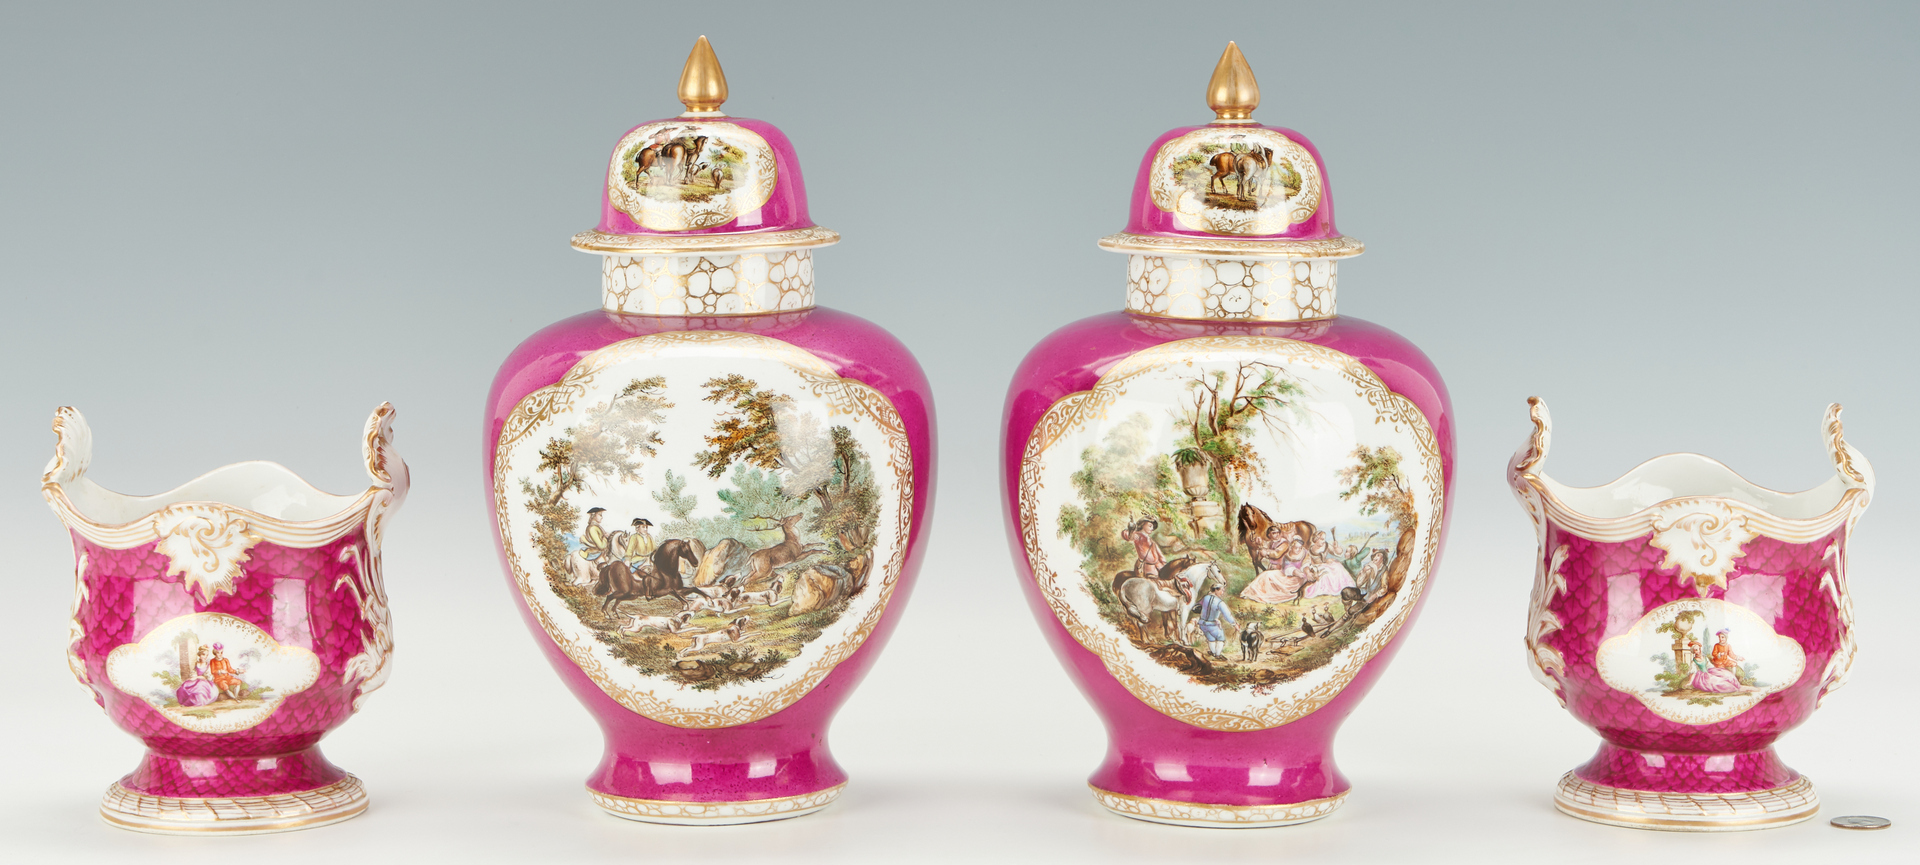 Lot 964: 4 Dresden Porcelain Items, Urns and Cachepots, attrib. Helena Wolfsohn